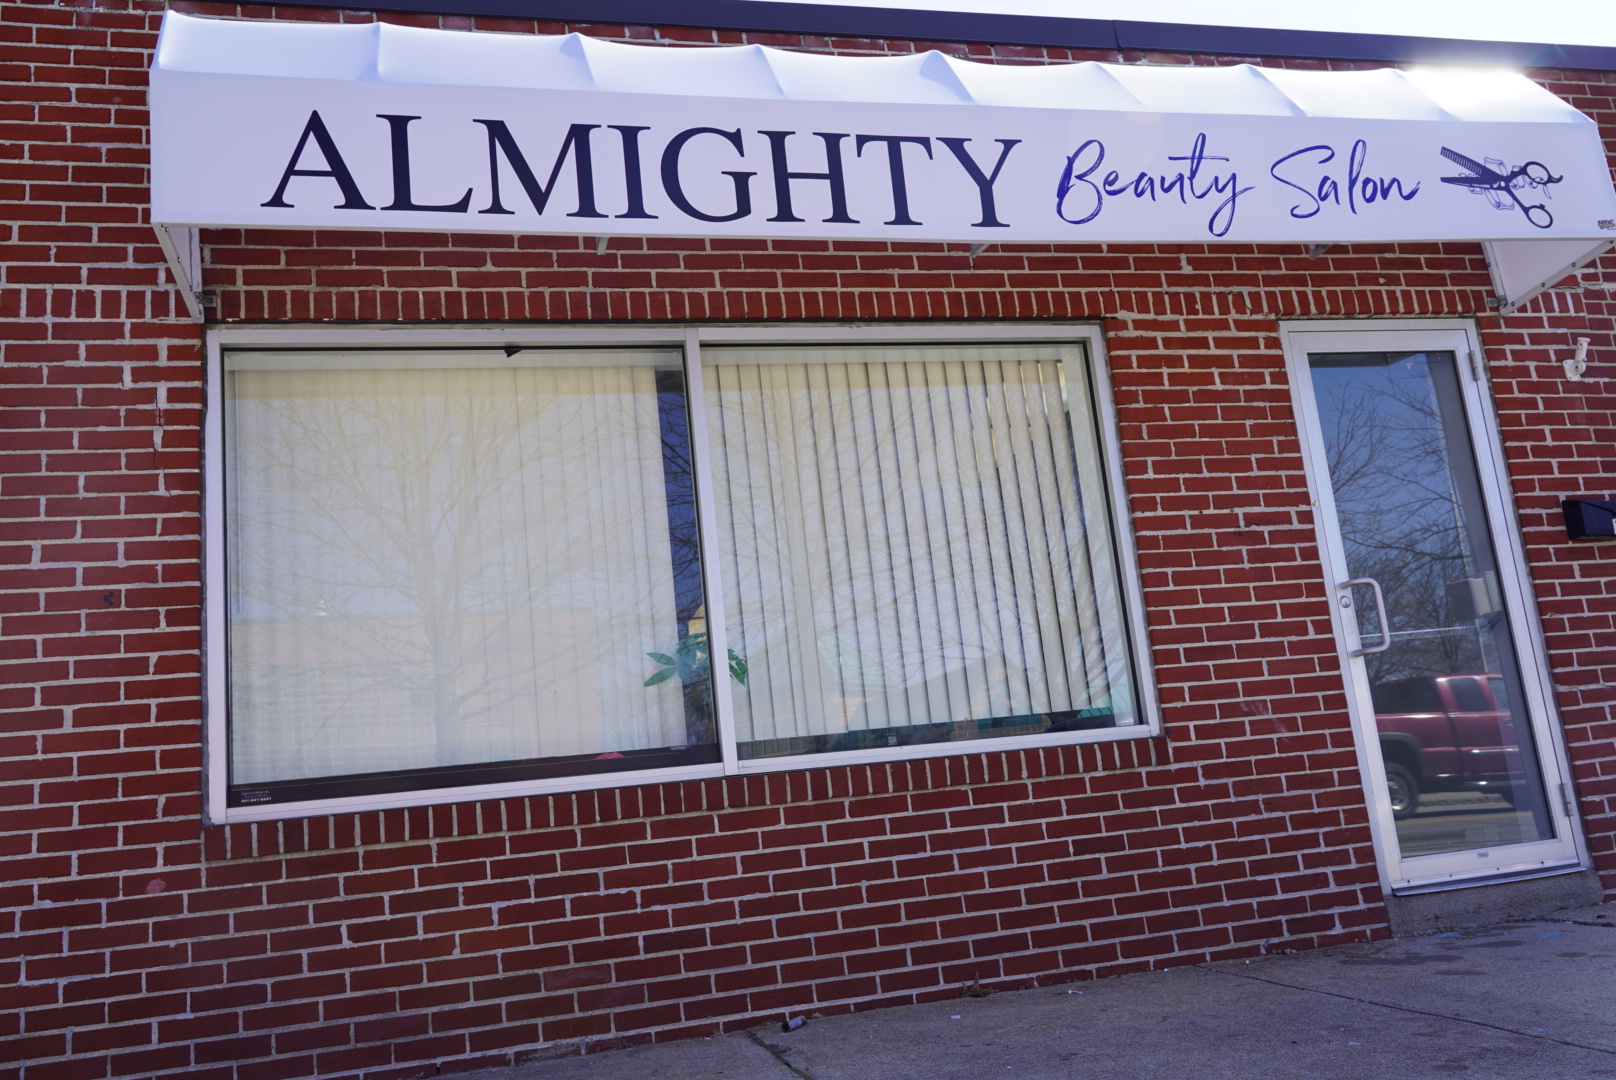 Almighty beauty salon